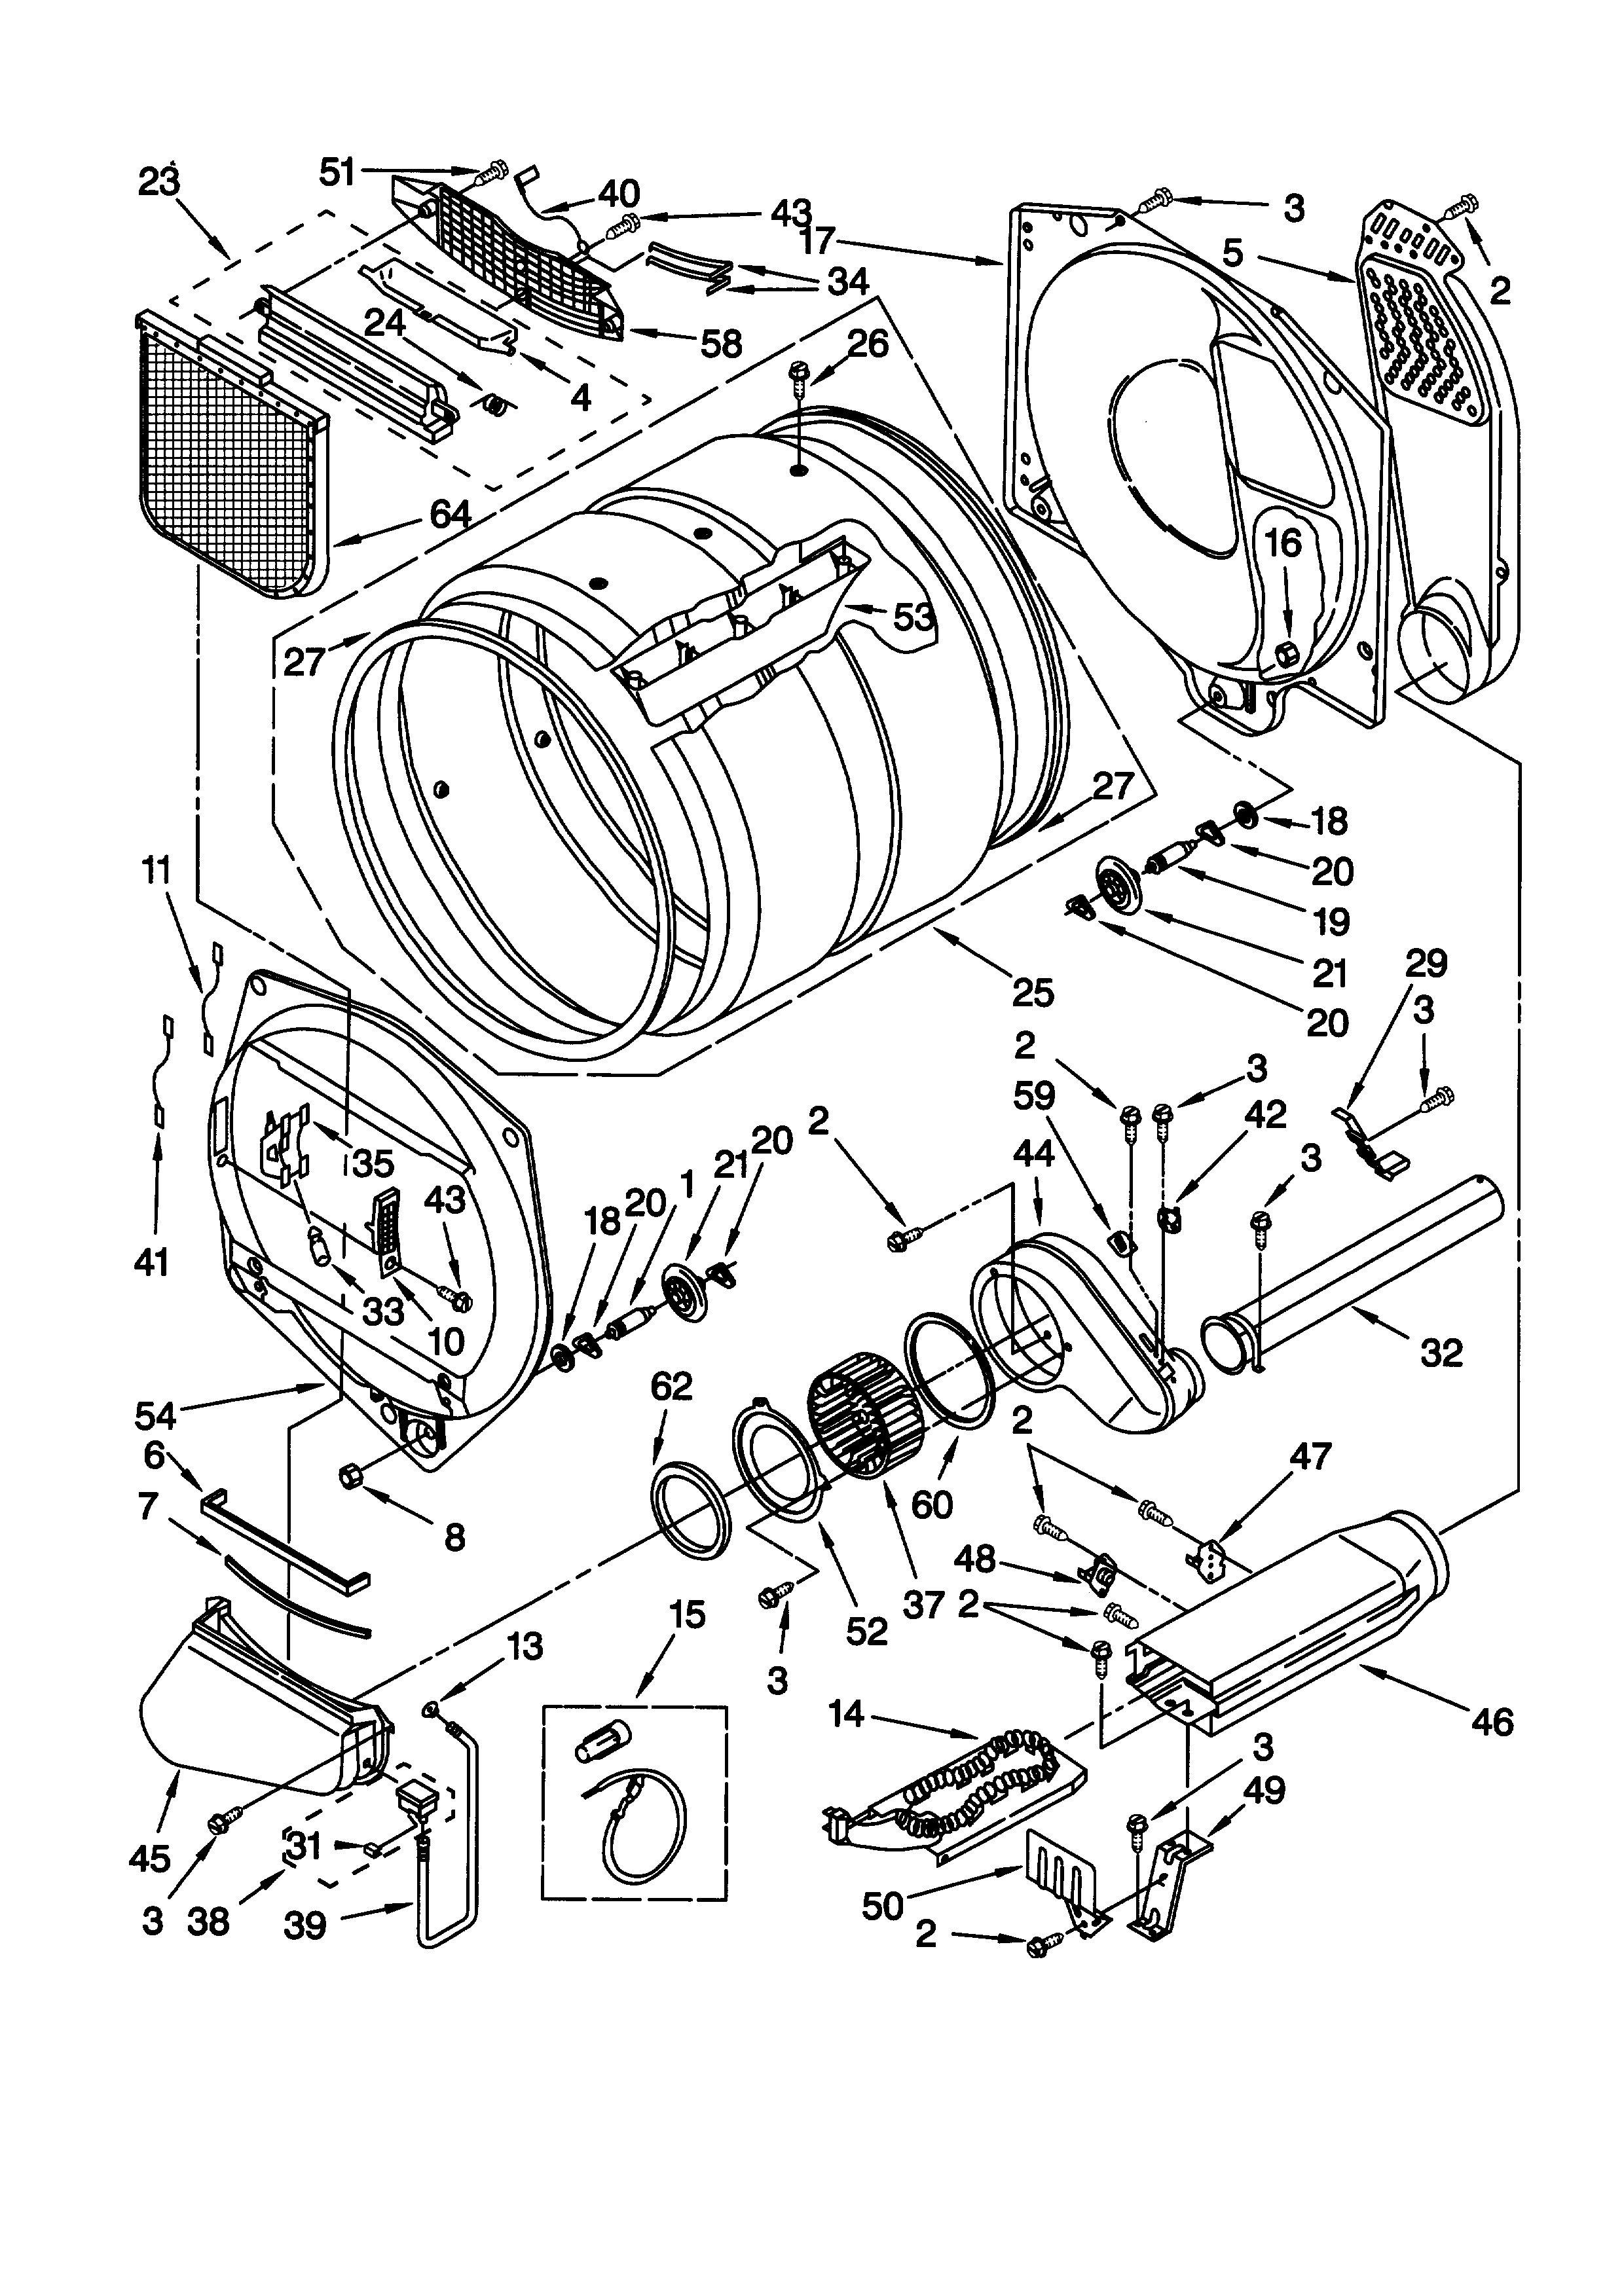 [DIAGRAM] Samsung Dryer Diagram Parts